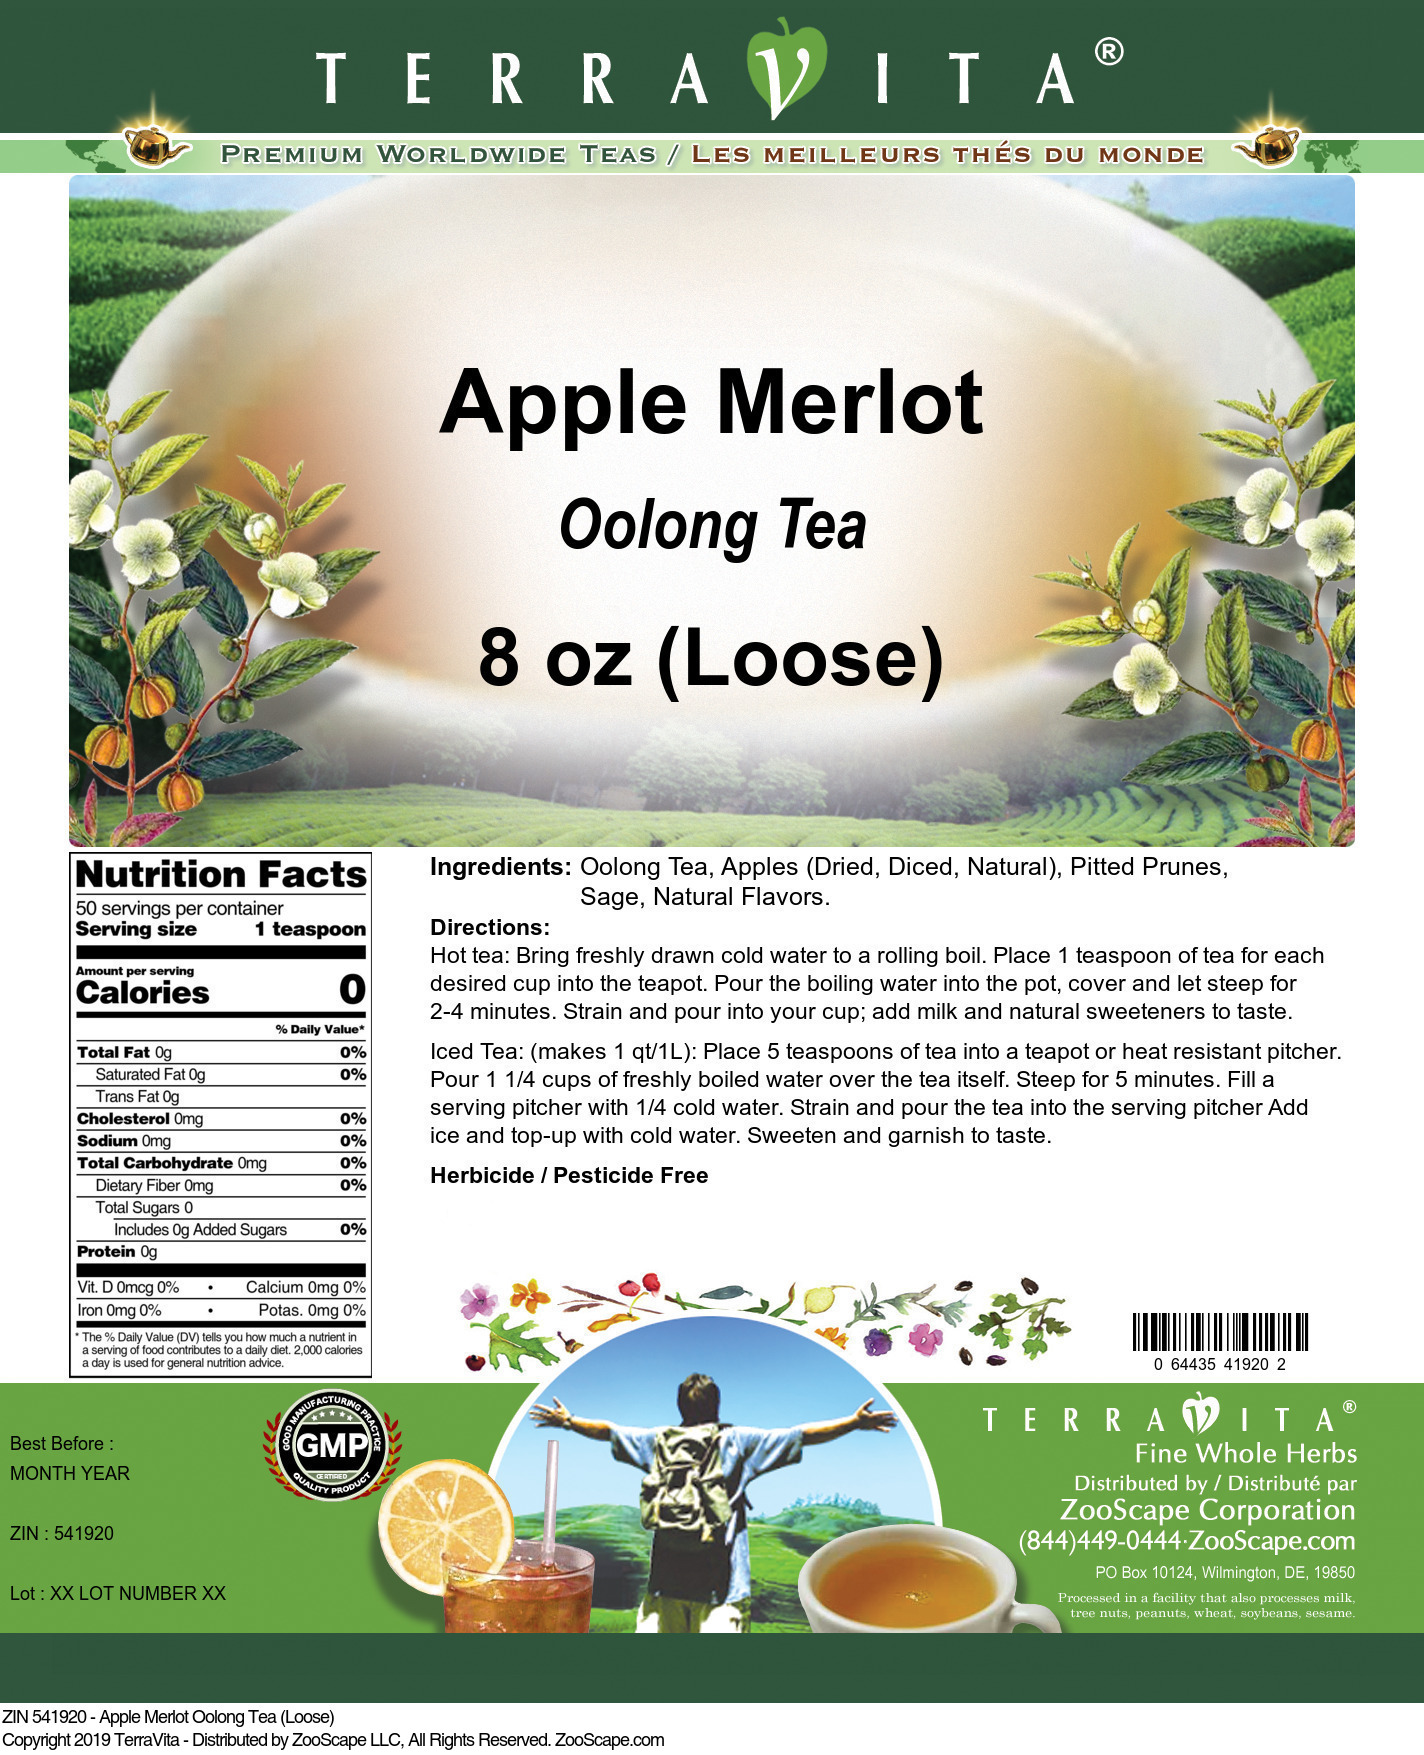 Apple Merlot Oolong Tea (Loose) - Label